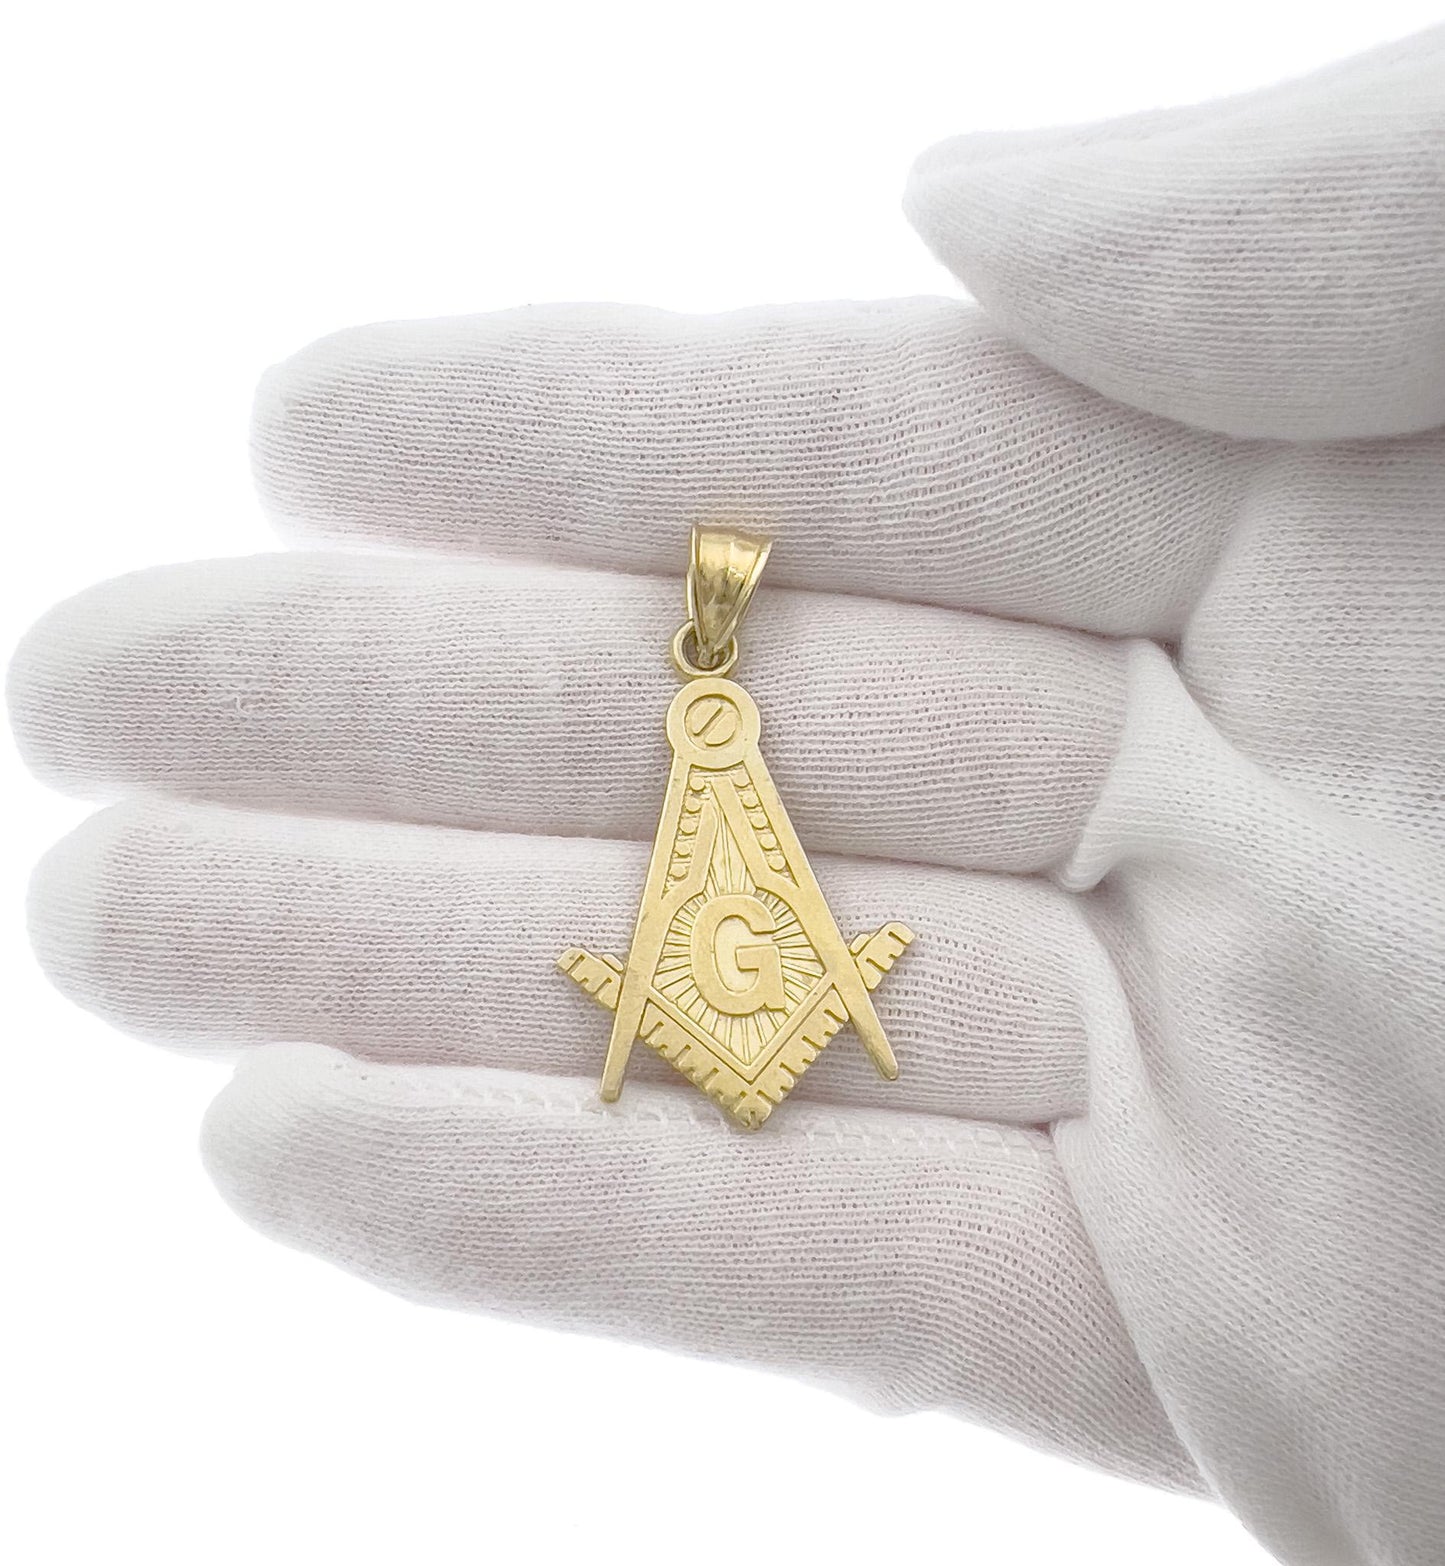 10k Yellow Gold Masonic Pendant Square Compass Charm 1.6"